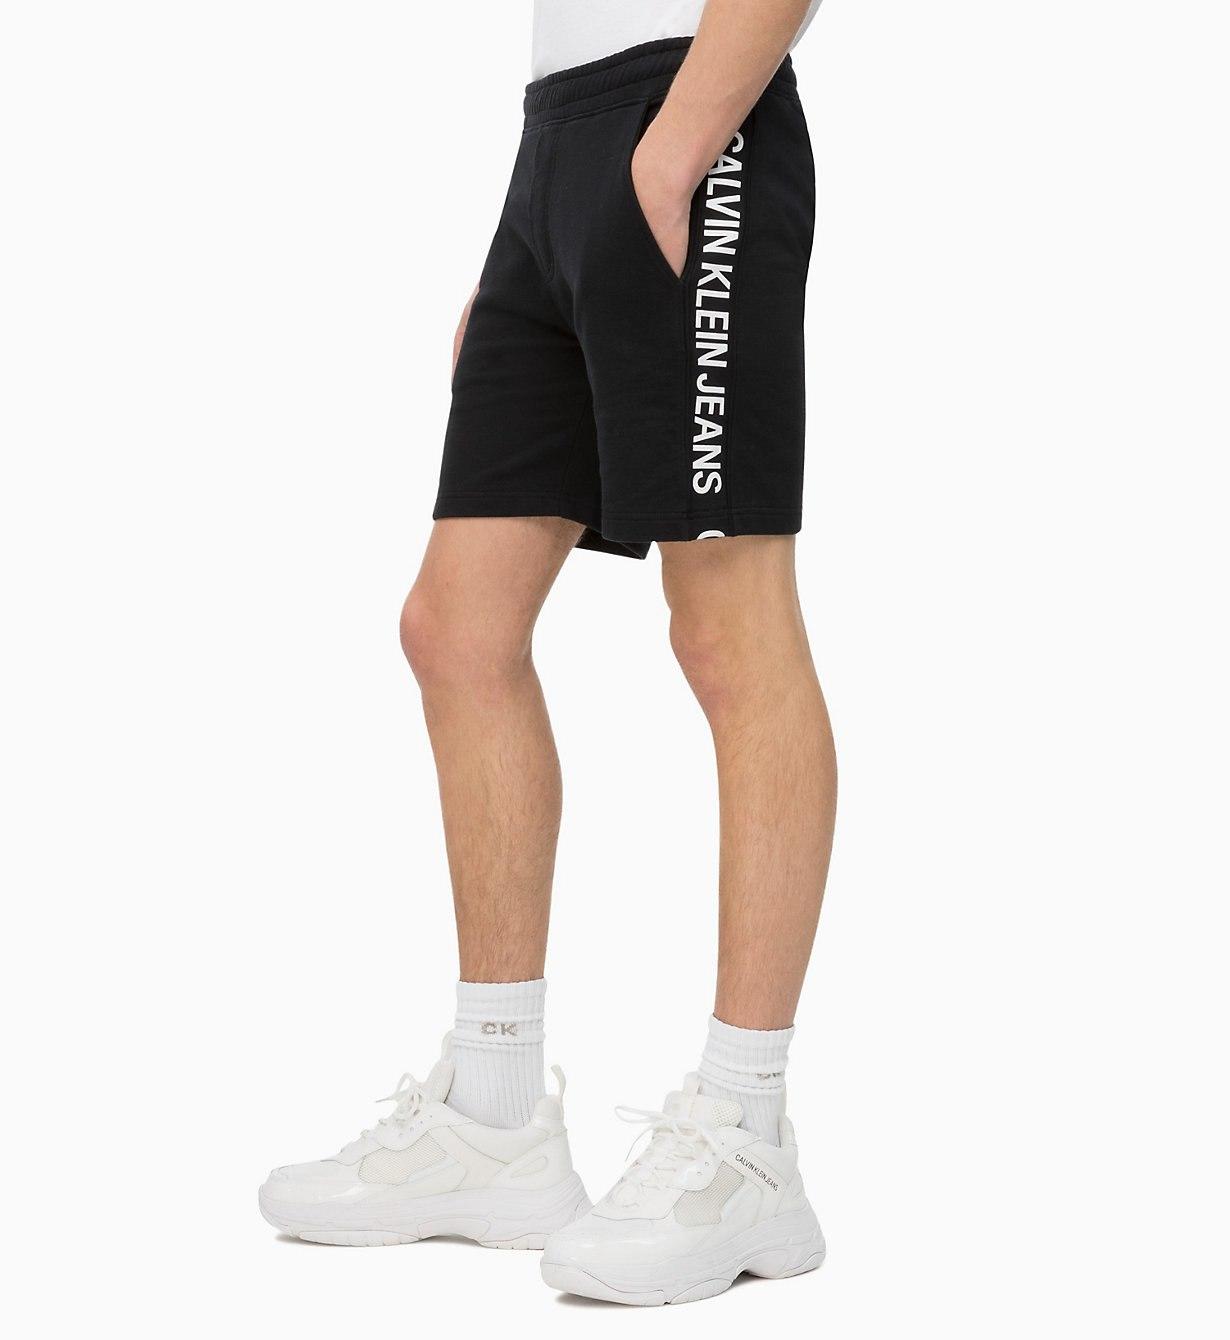 Calvin Klein Cotton Side Logo Jogging Shorts in Black for Men - Lyst